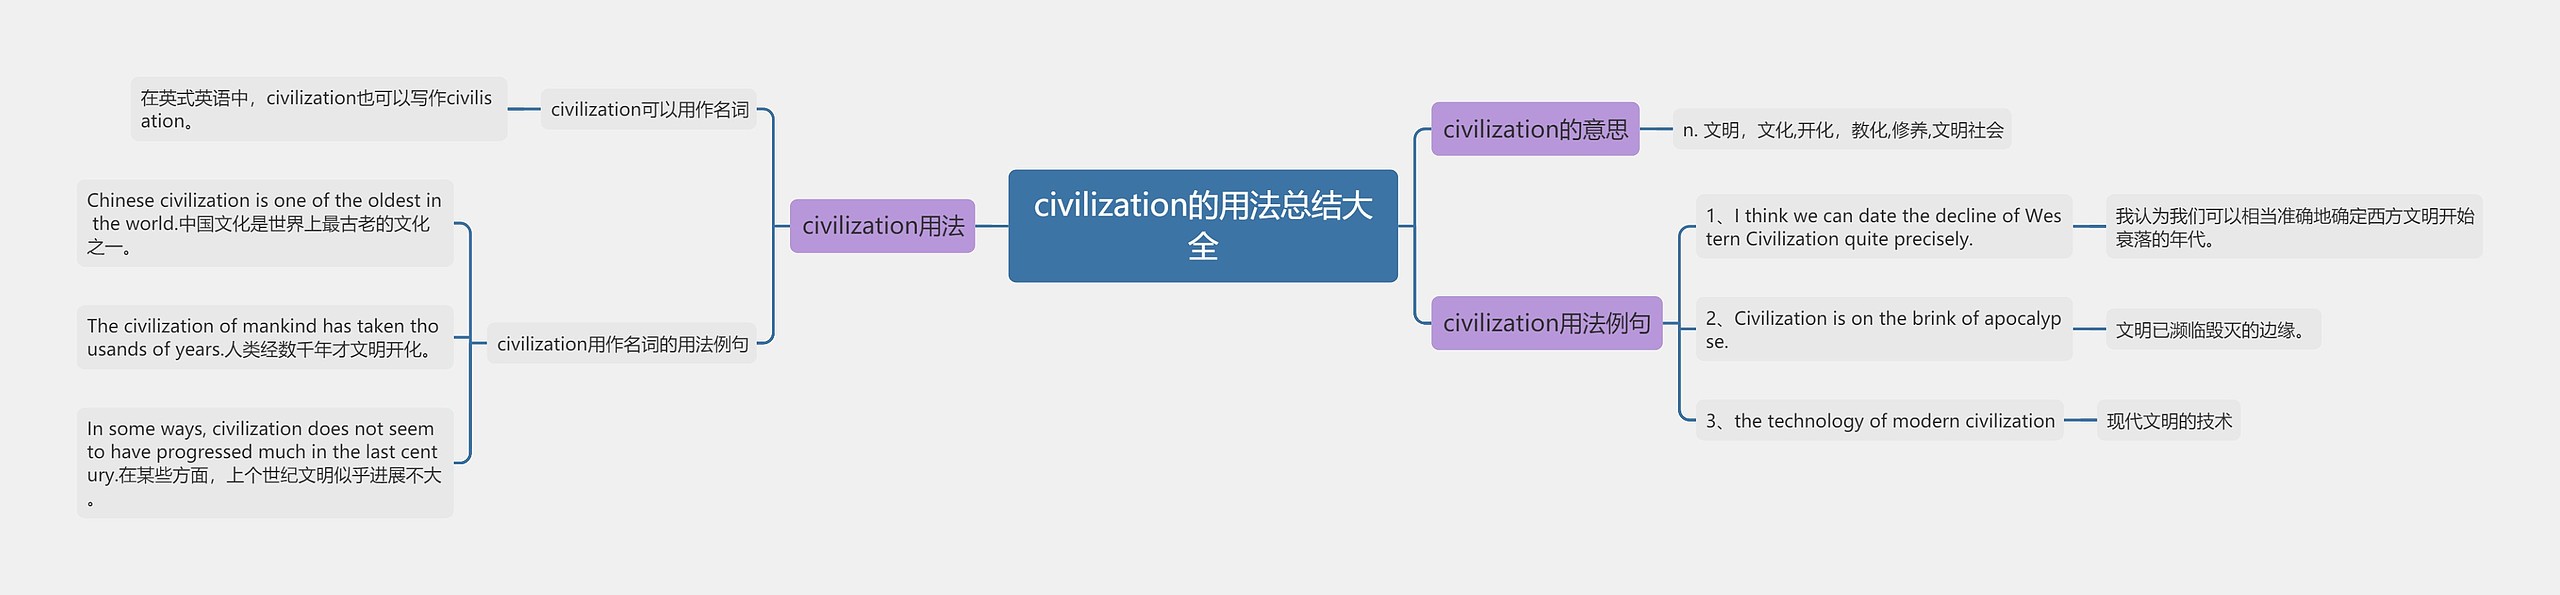 civilization的用法总结大全思维导图